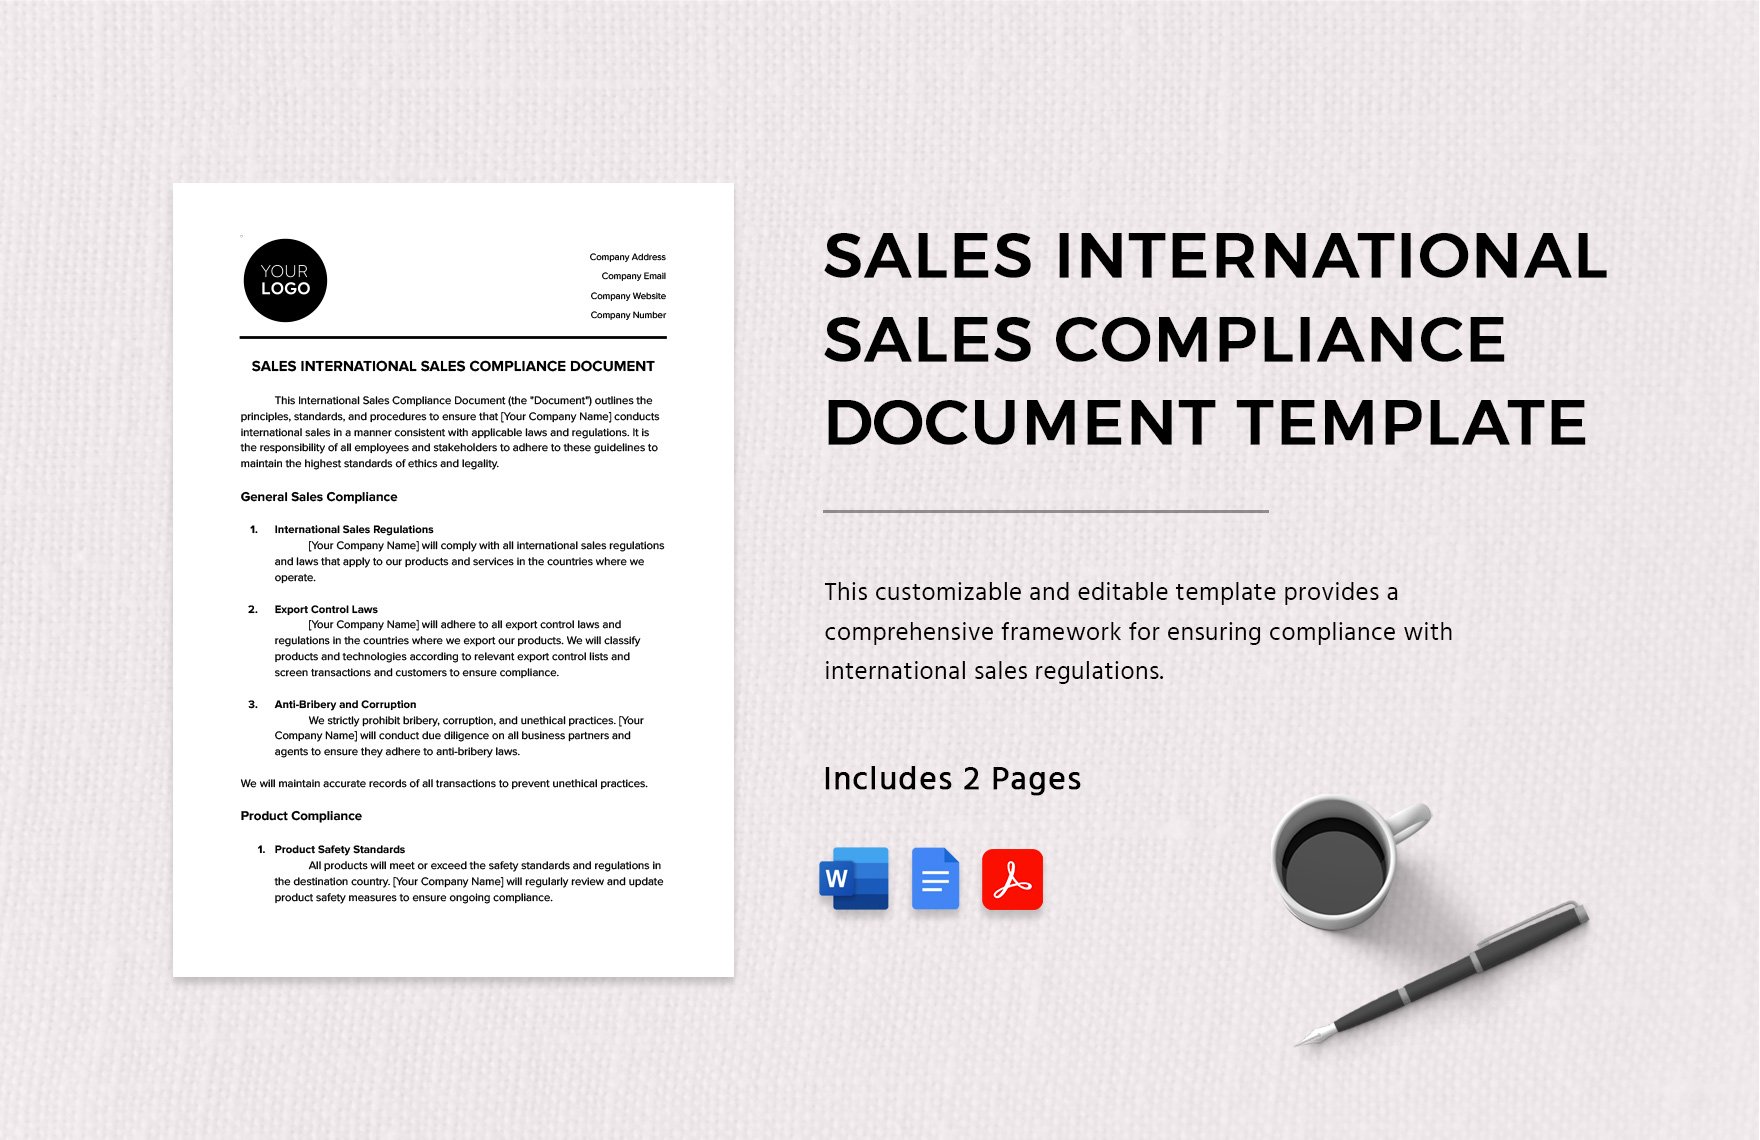 Sales International Sales Compliance Document Template in Word, Google Docs, PDF